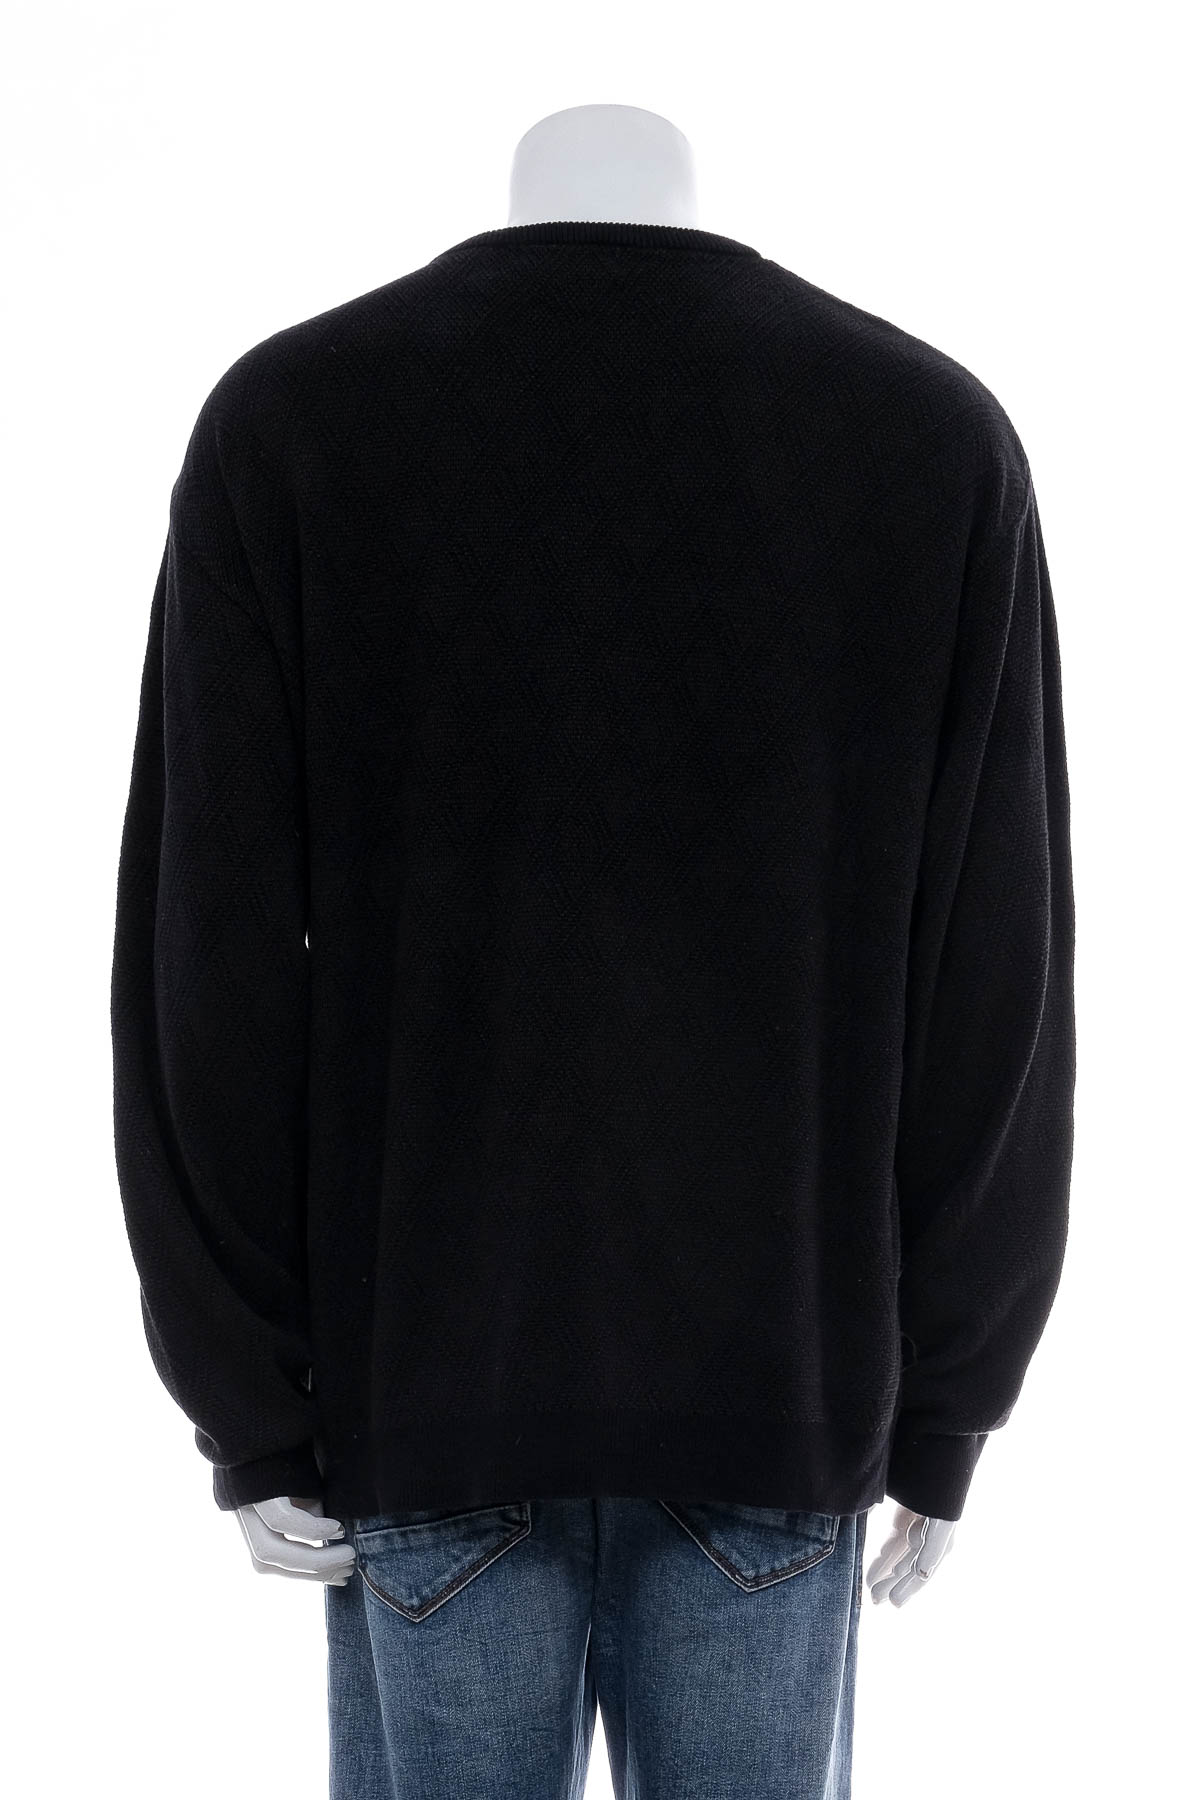 Men's sweater - Cottonreal - 1